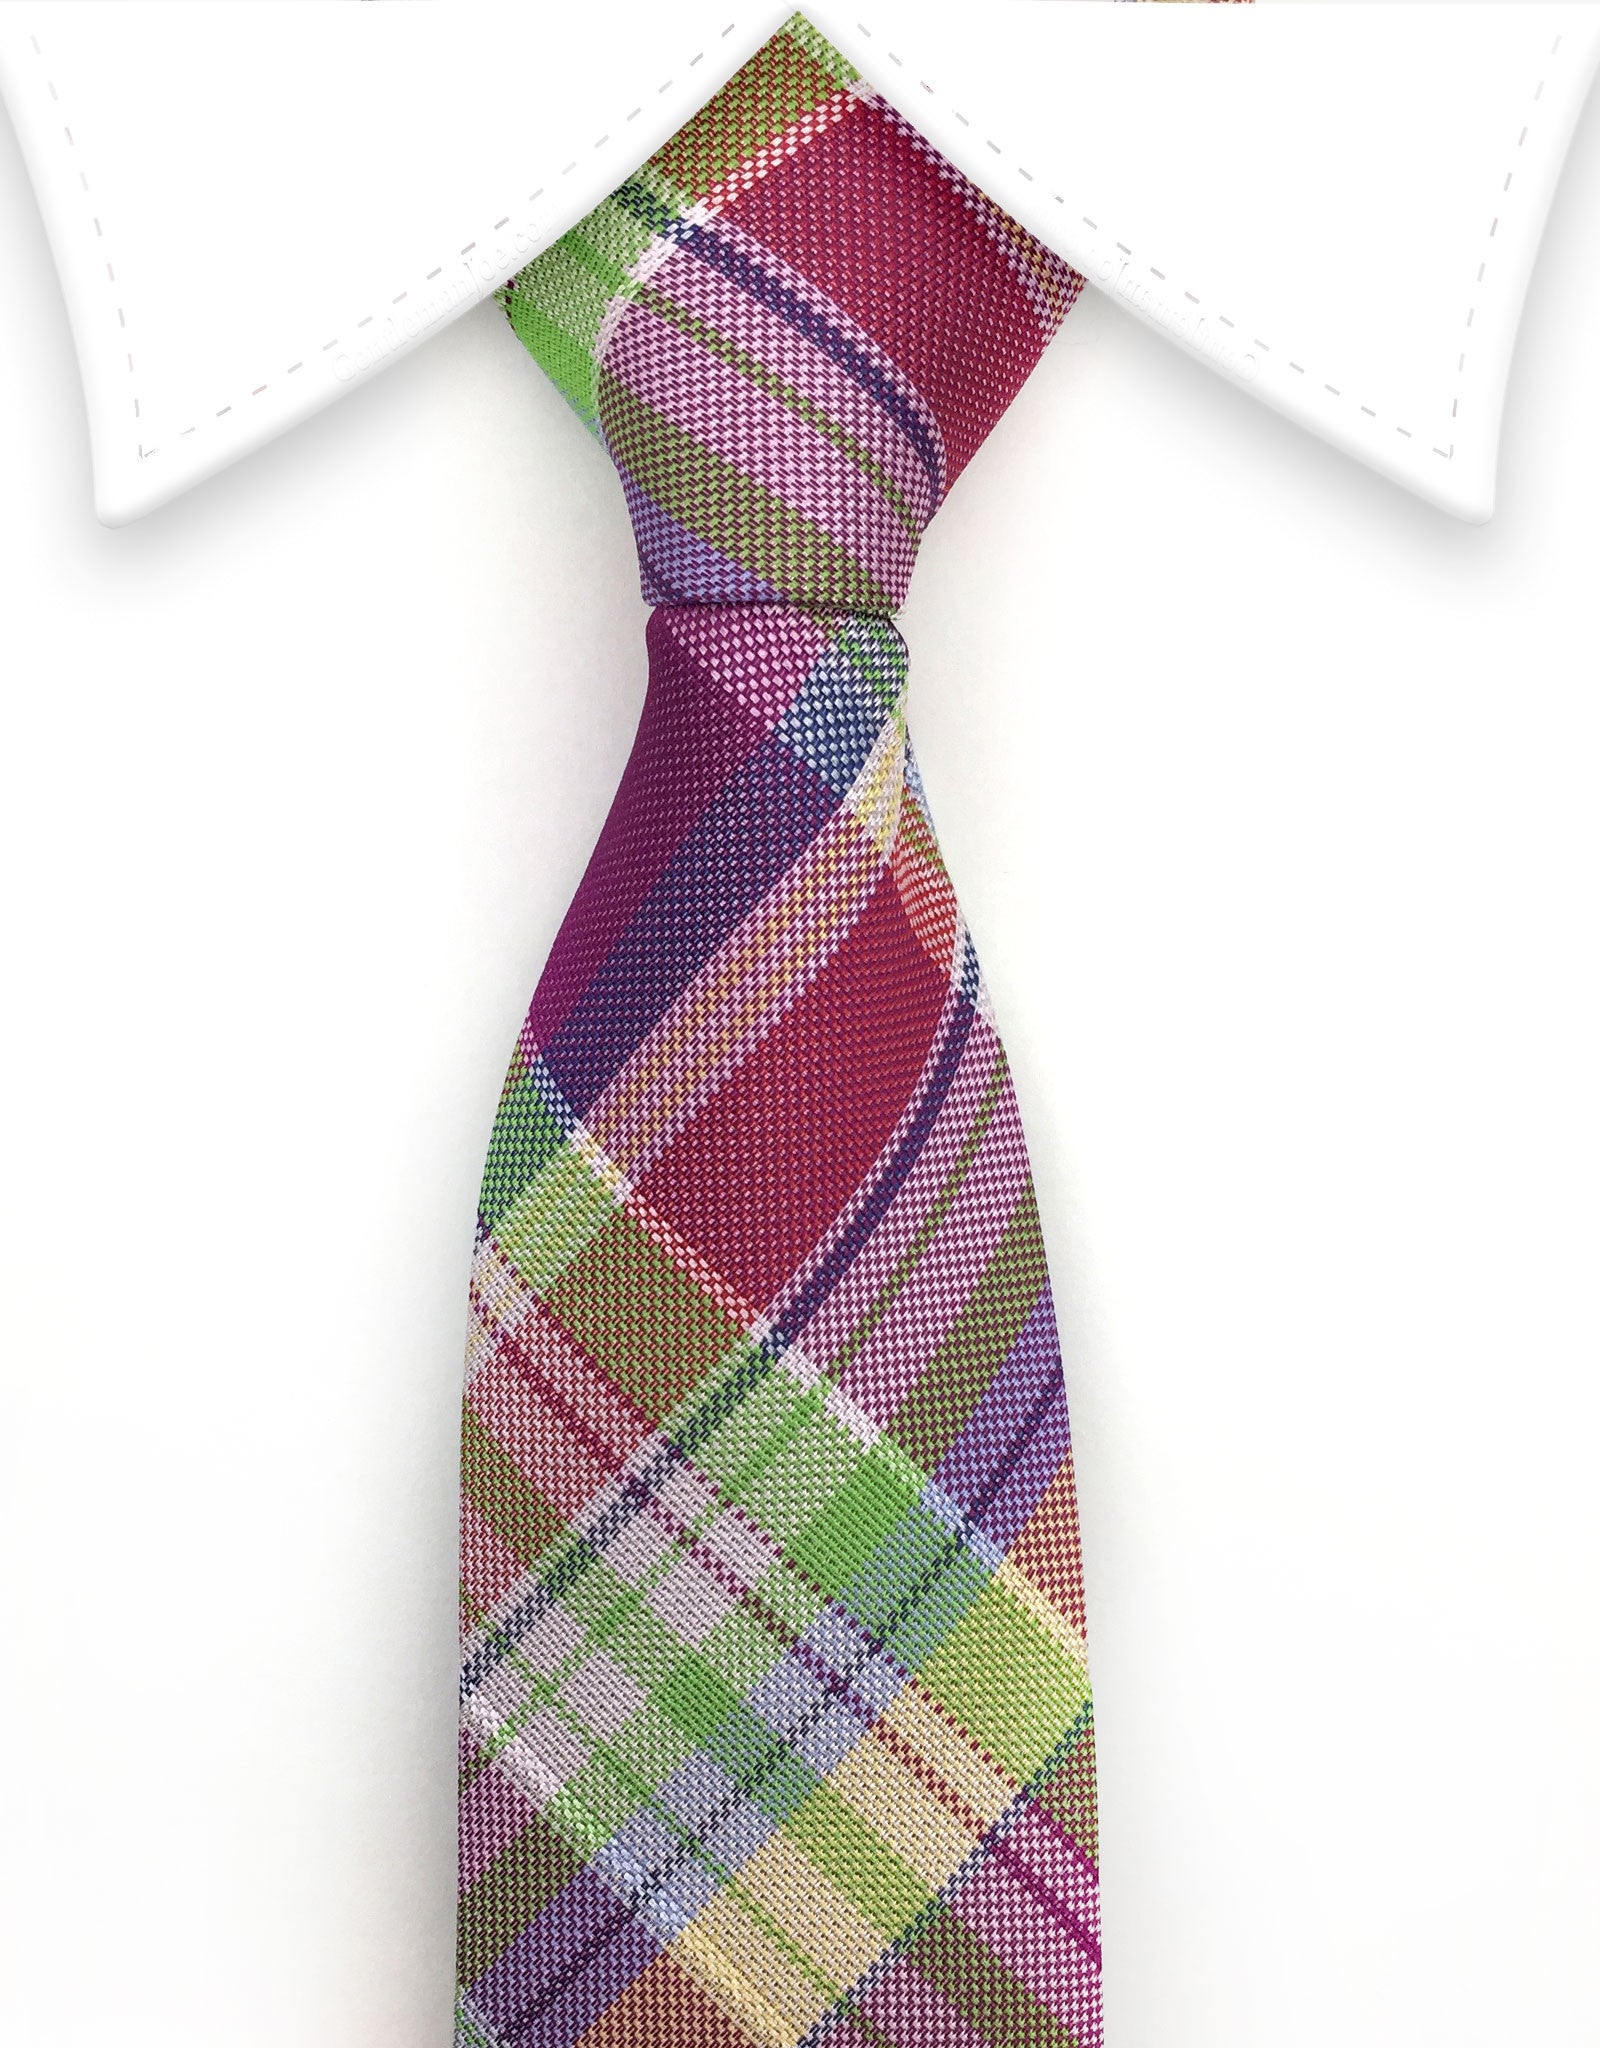 Boy's Purple Plaid Tie